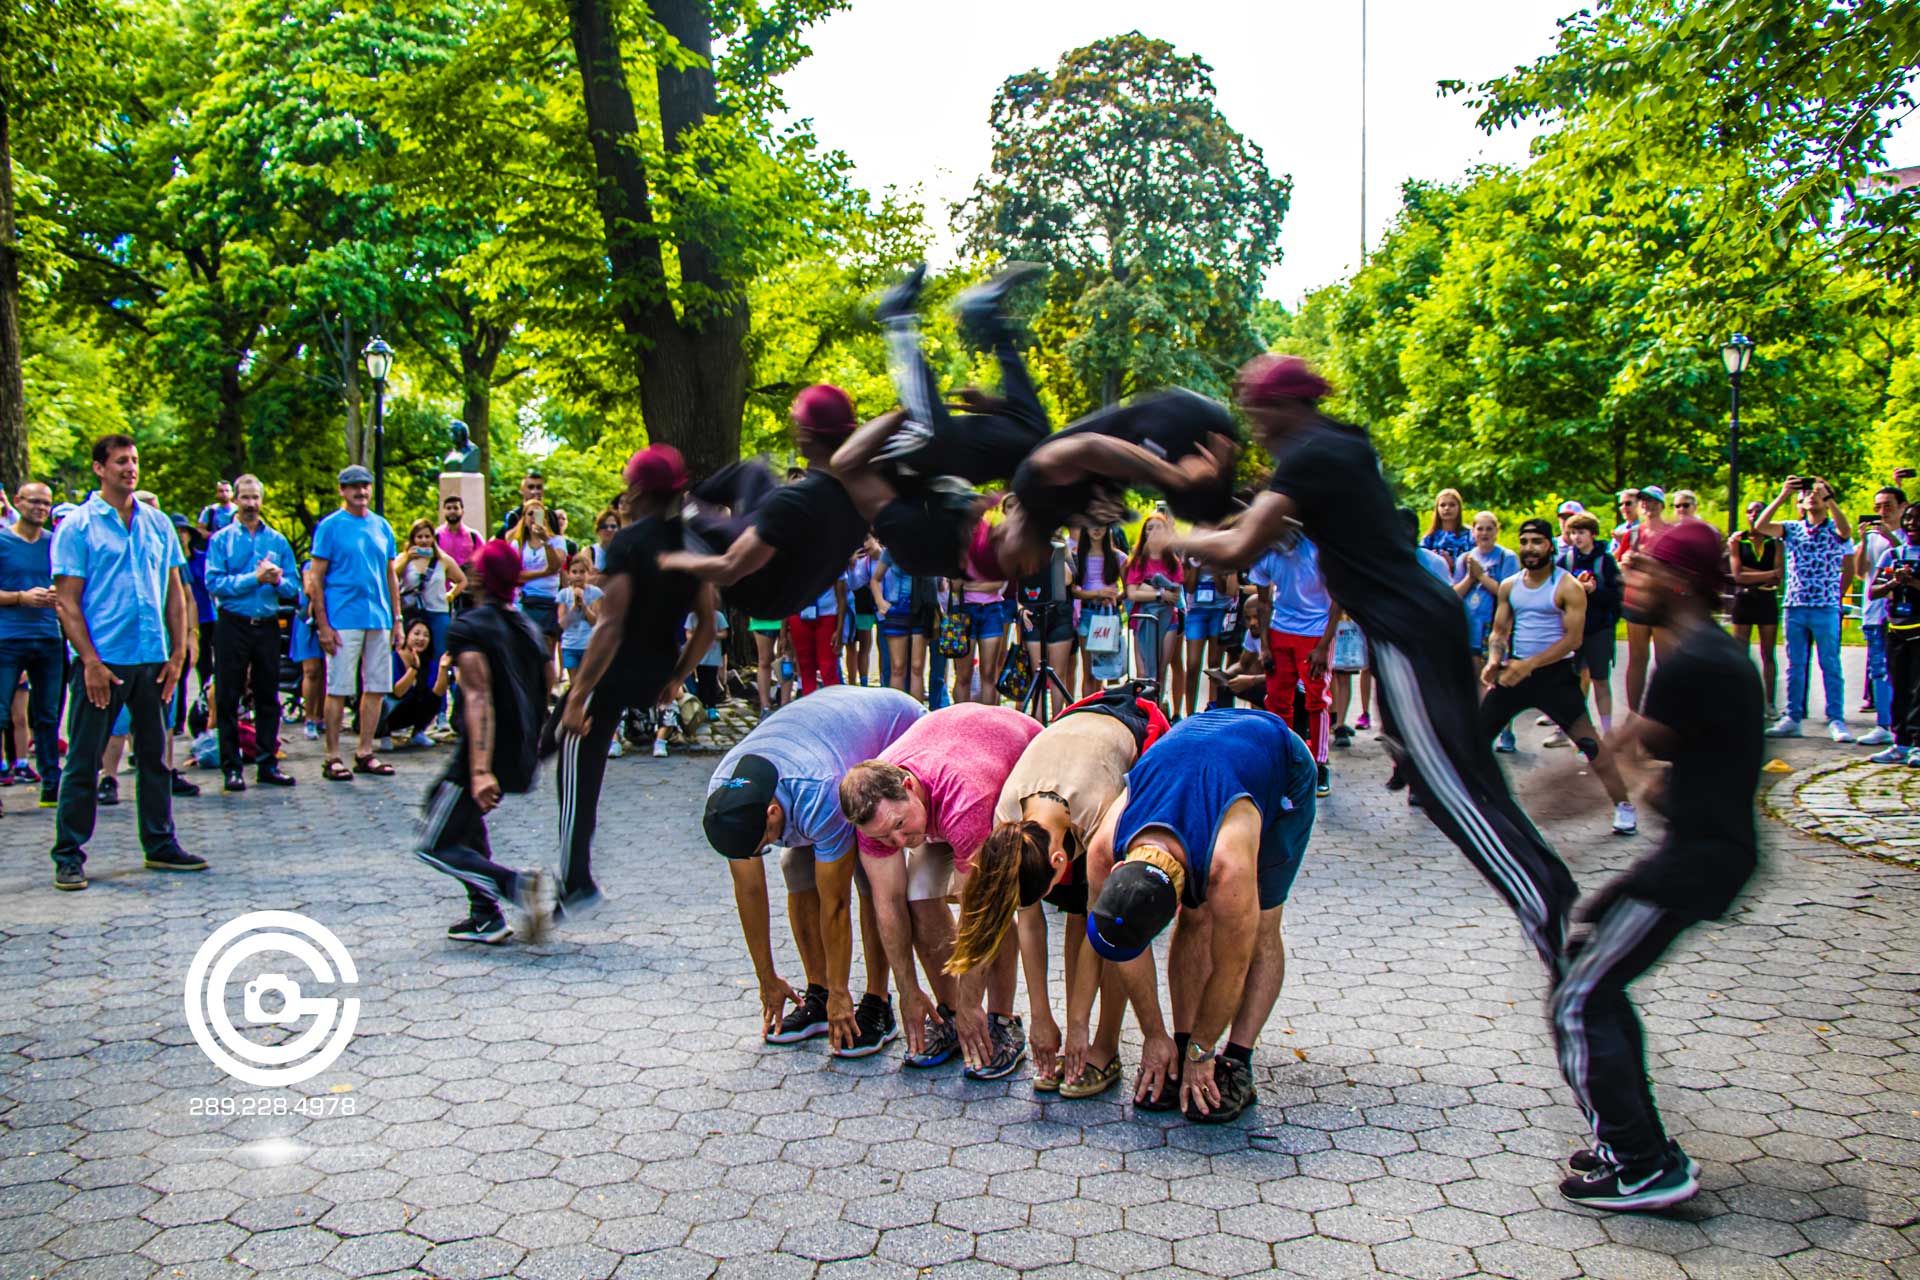 Central Park street performer jumps over crowd